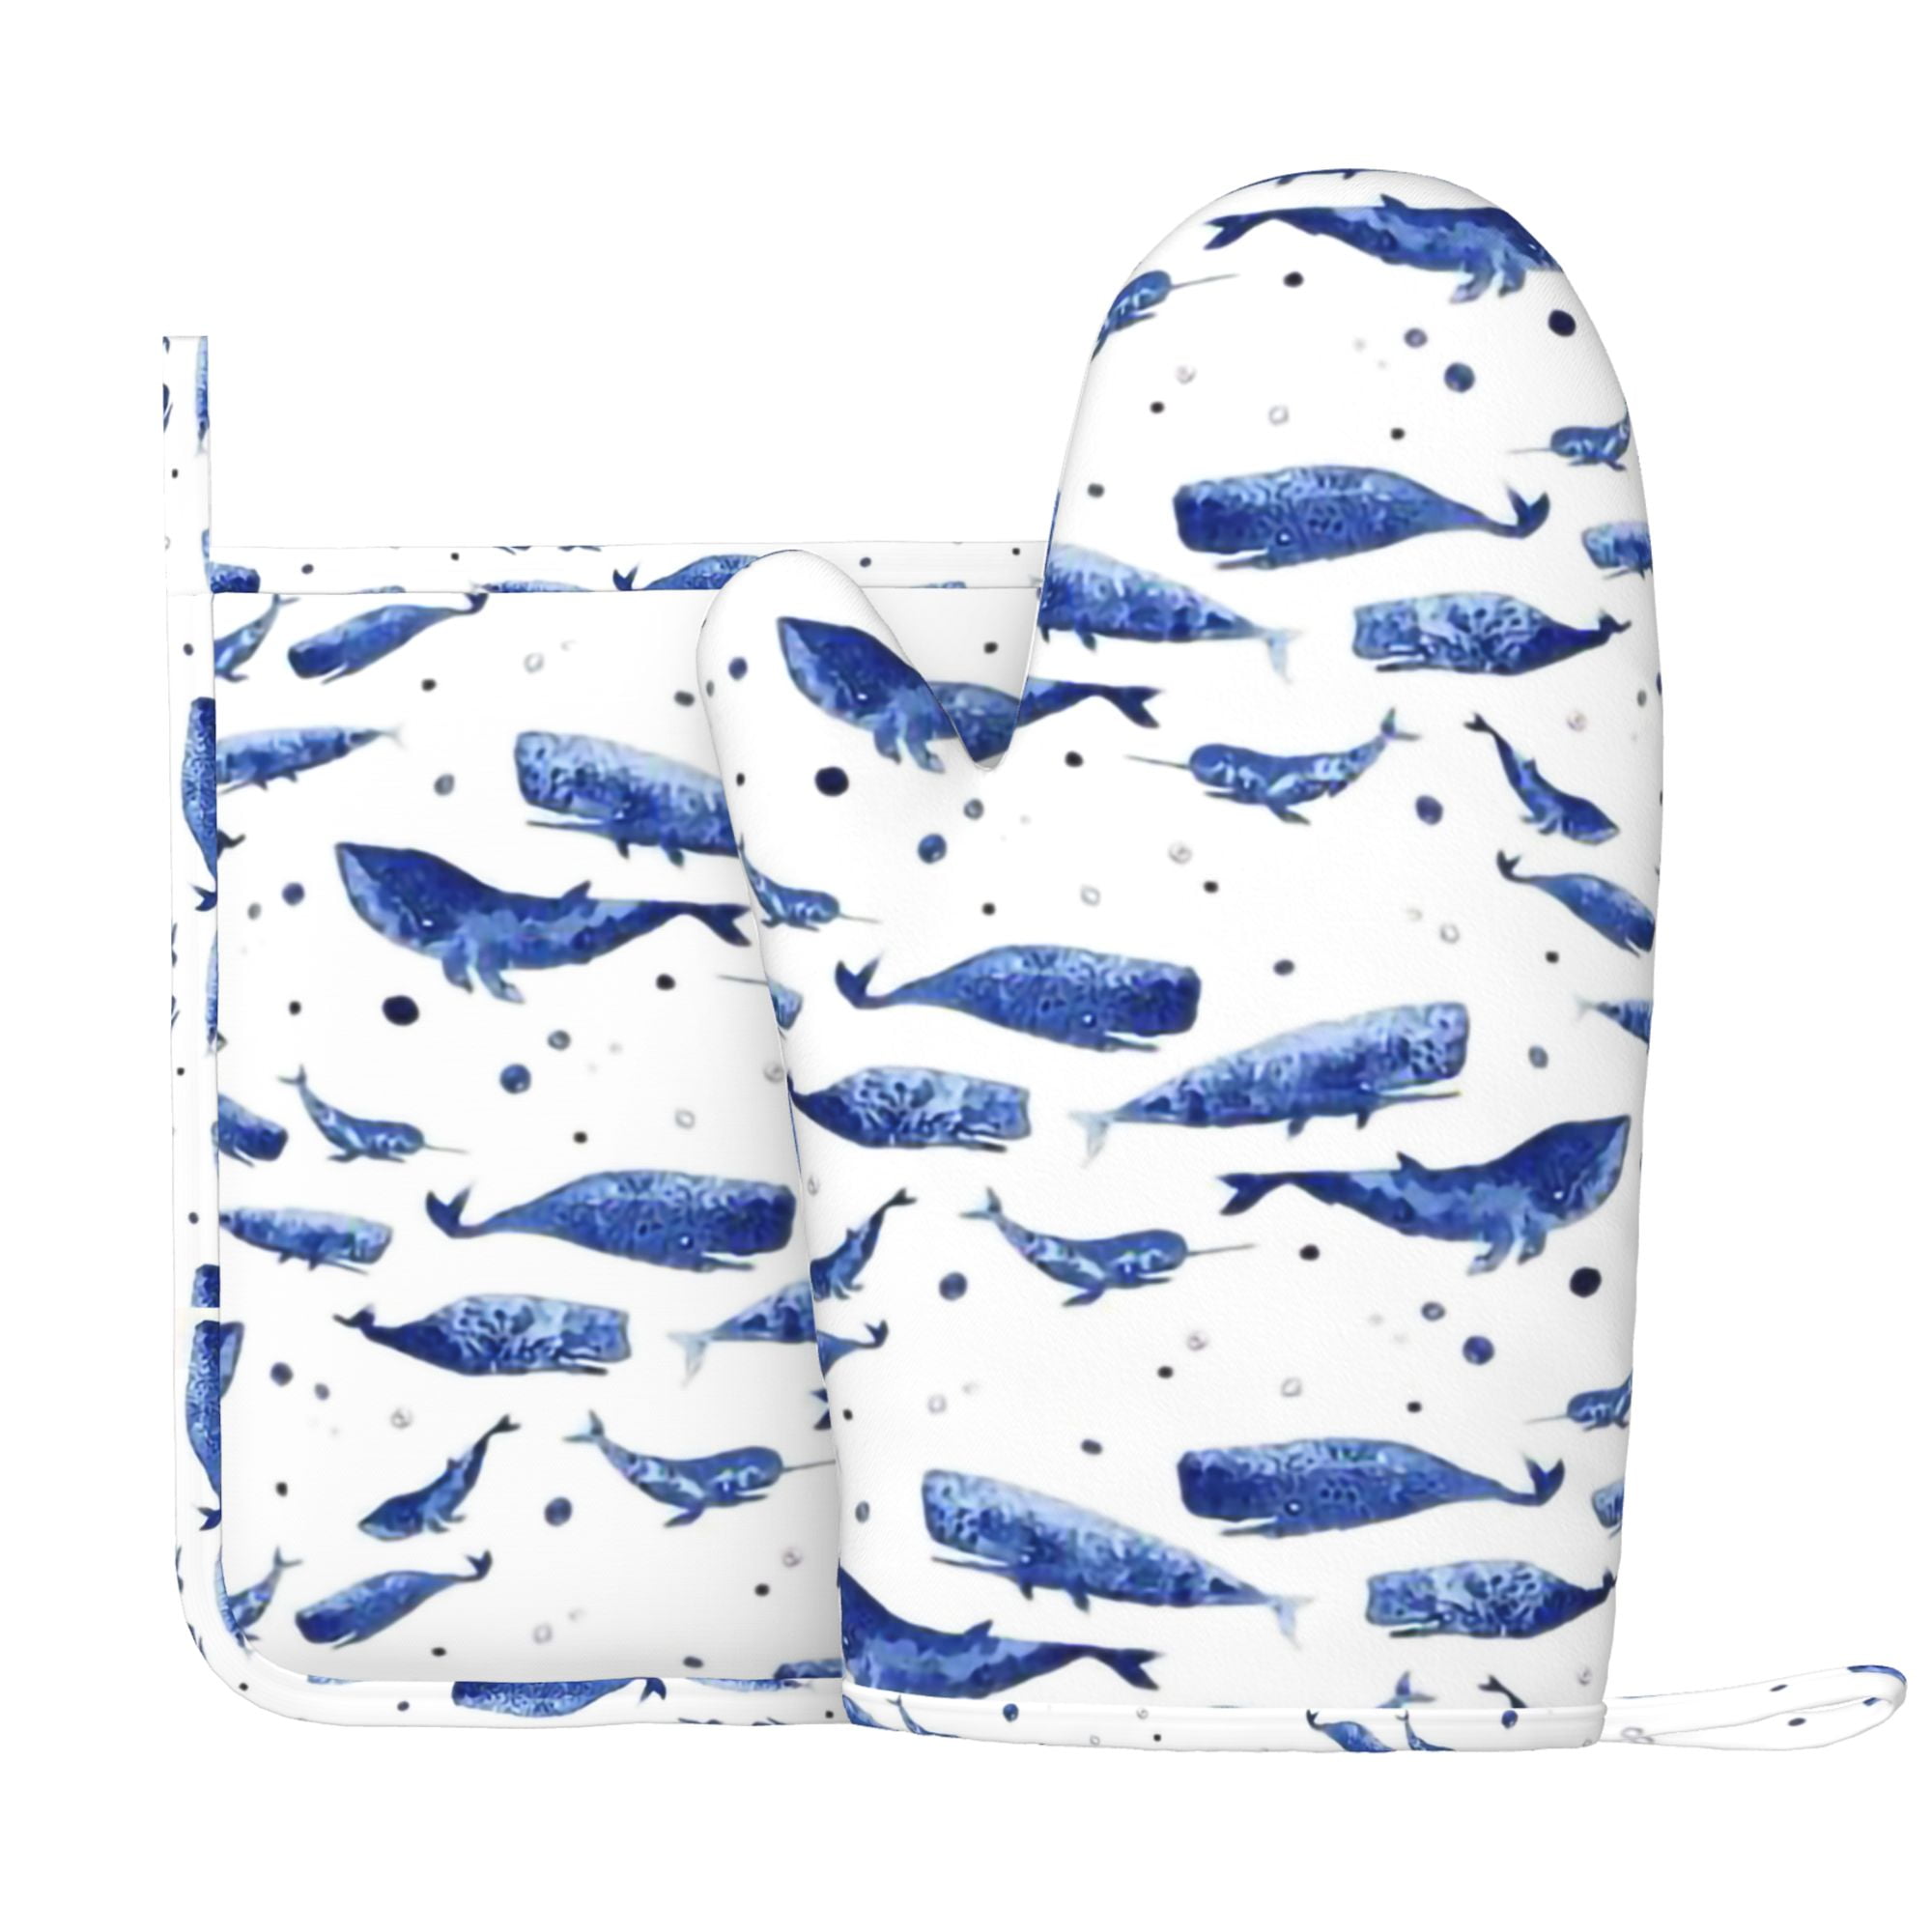 Cotton Oven Mitts Heat Resistant Polar Bear Pattern Gloves Pot Holder 1  Pair - Blue+White - Bed Bath & Beyond - 36355612